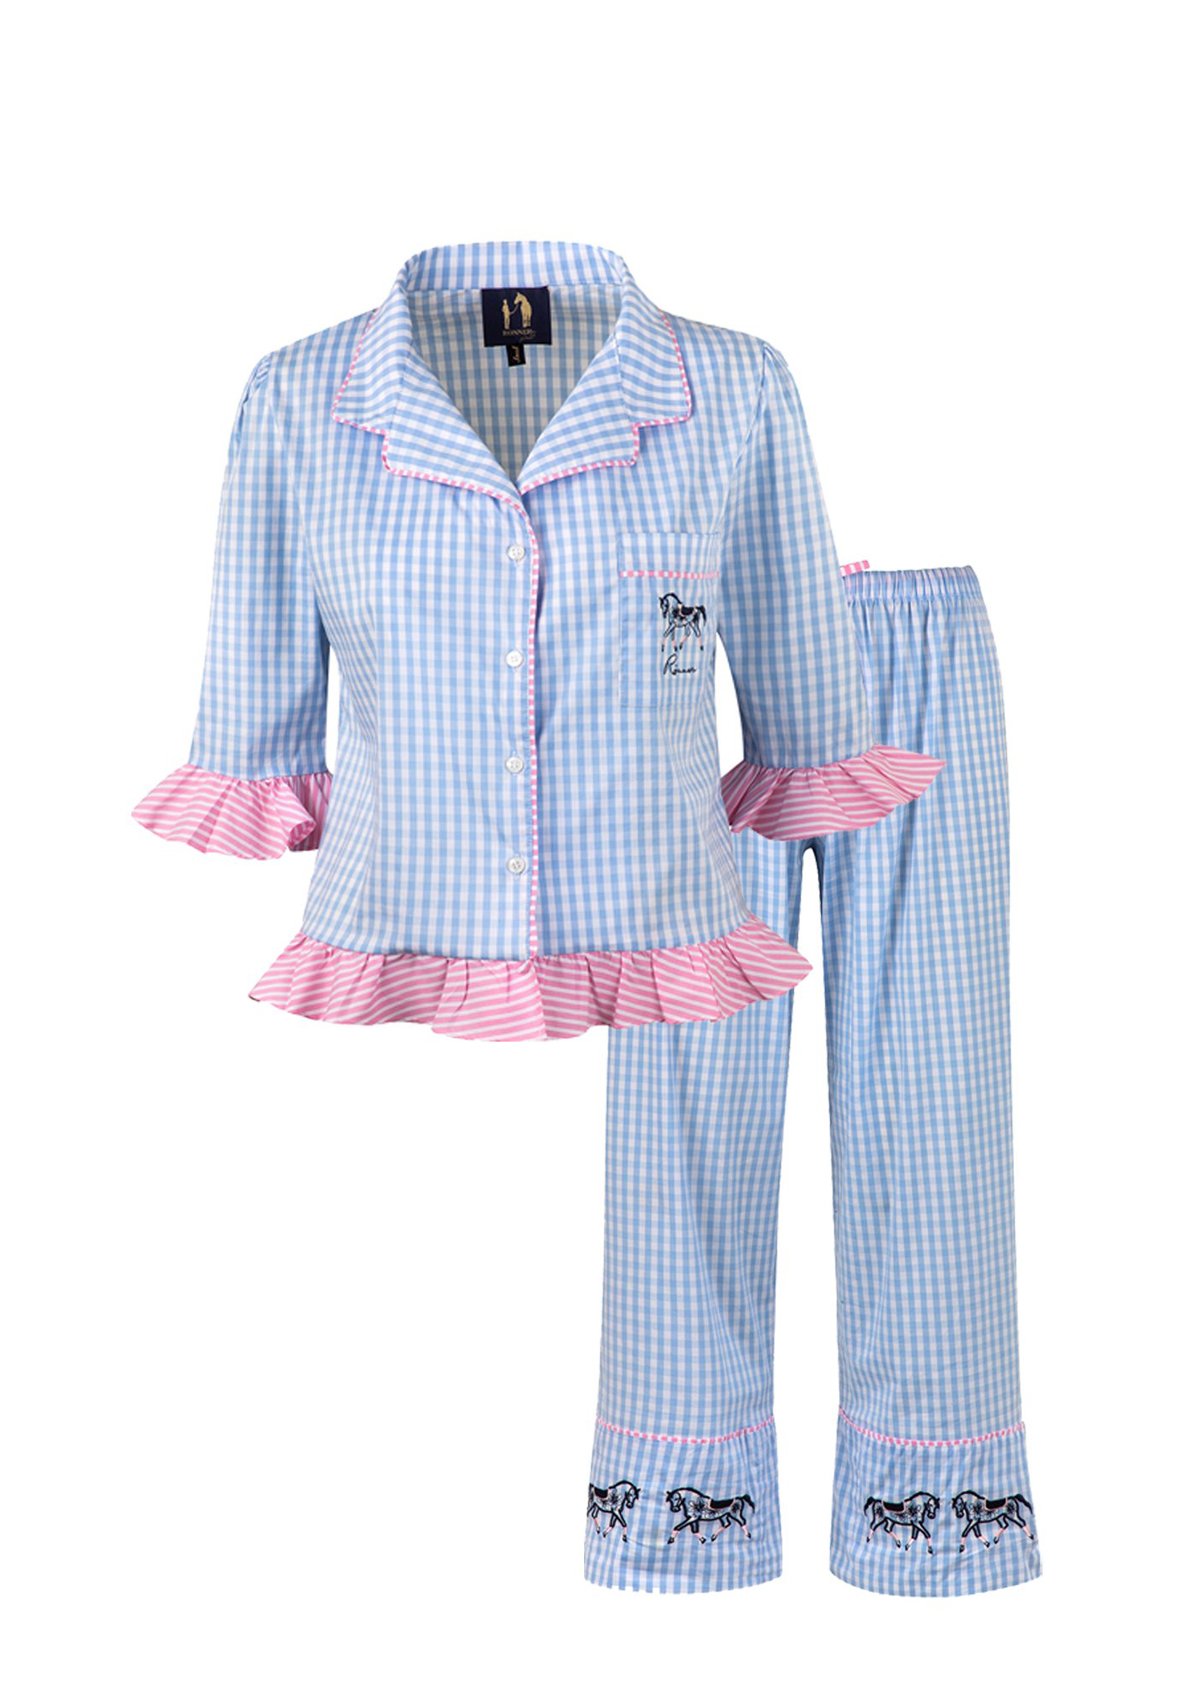 Blue gingham cotton pajama set with pink trim